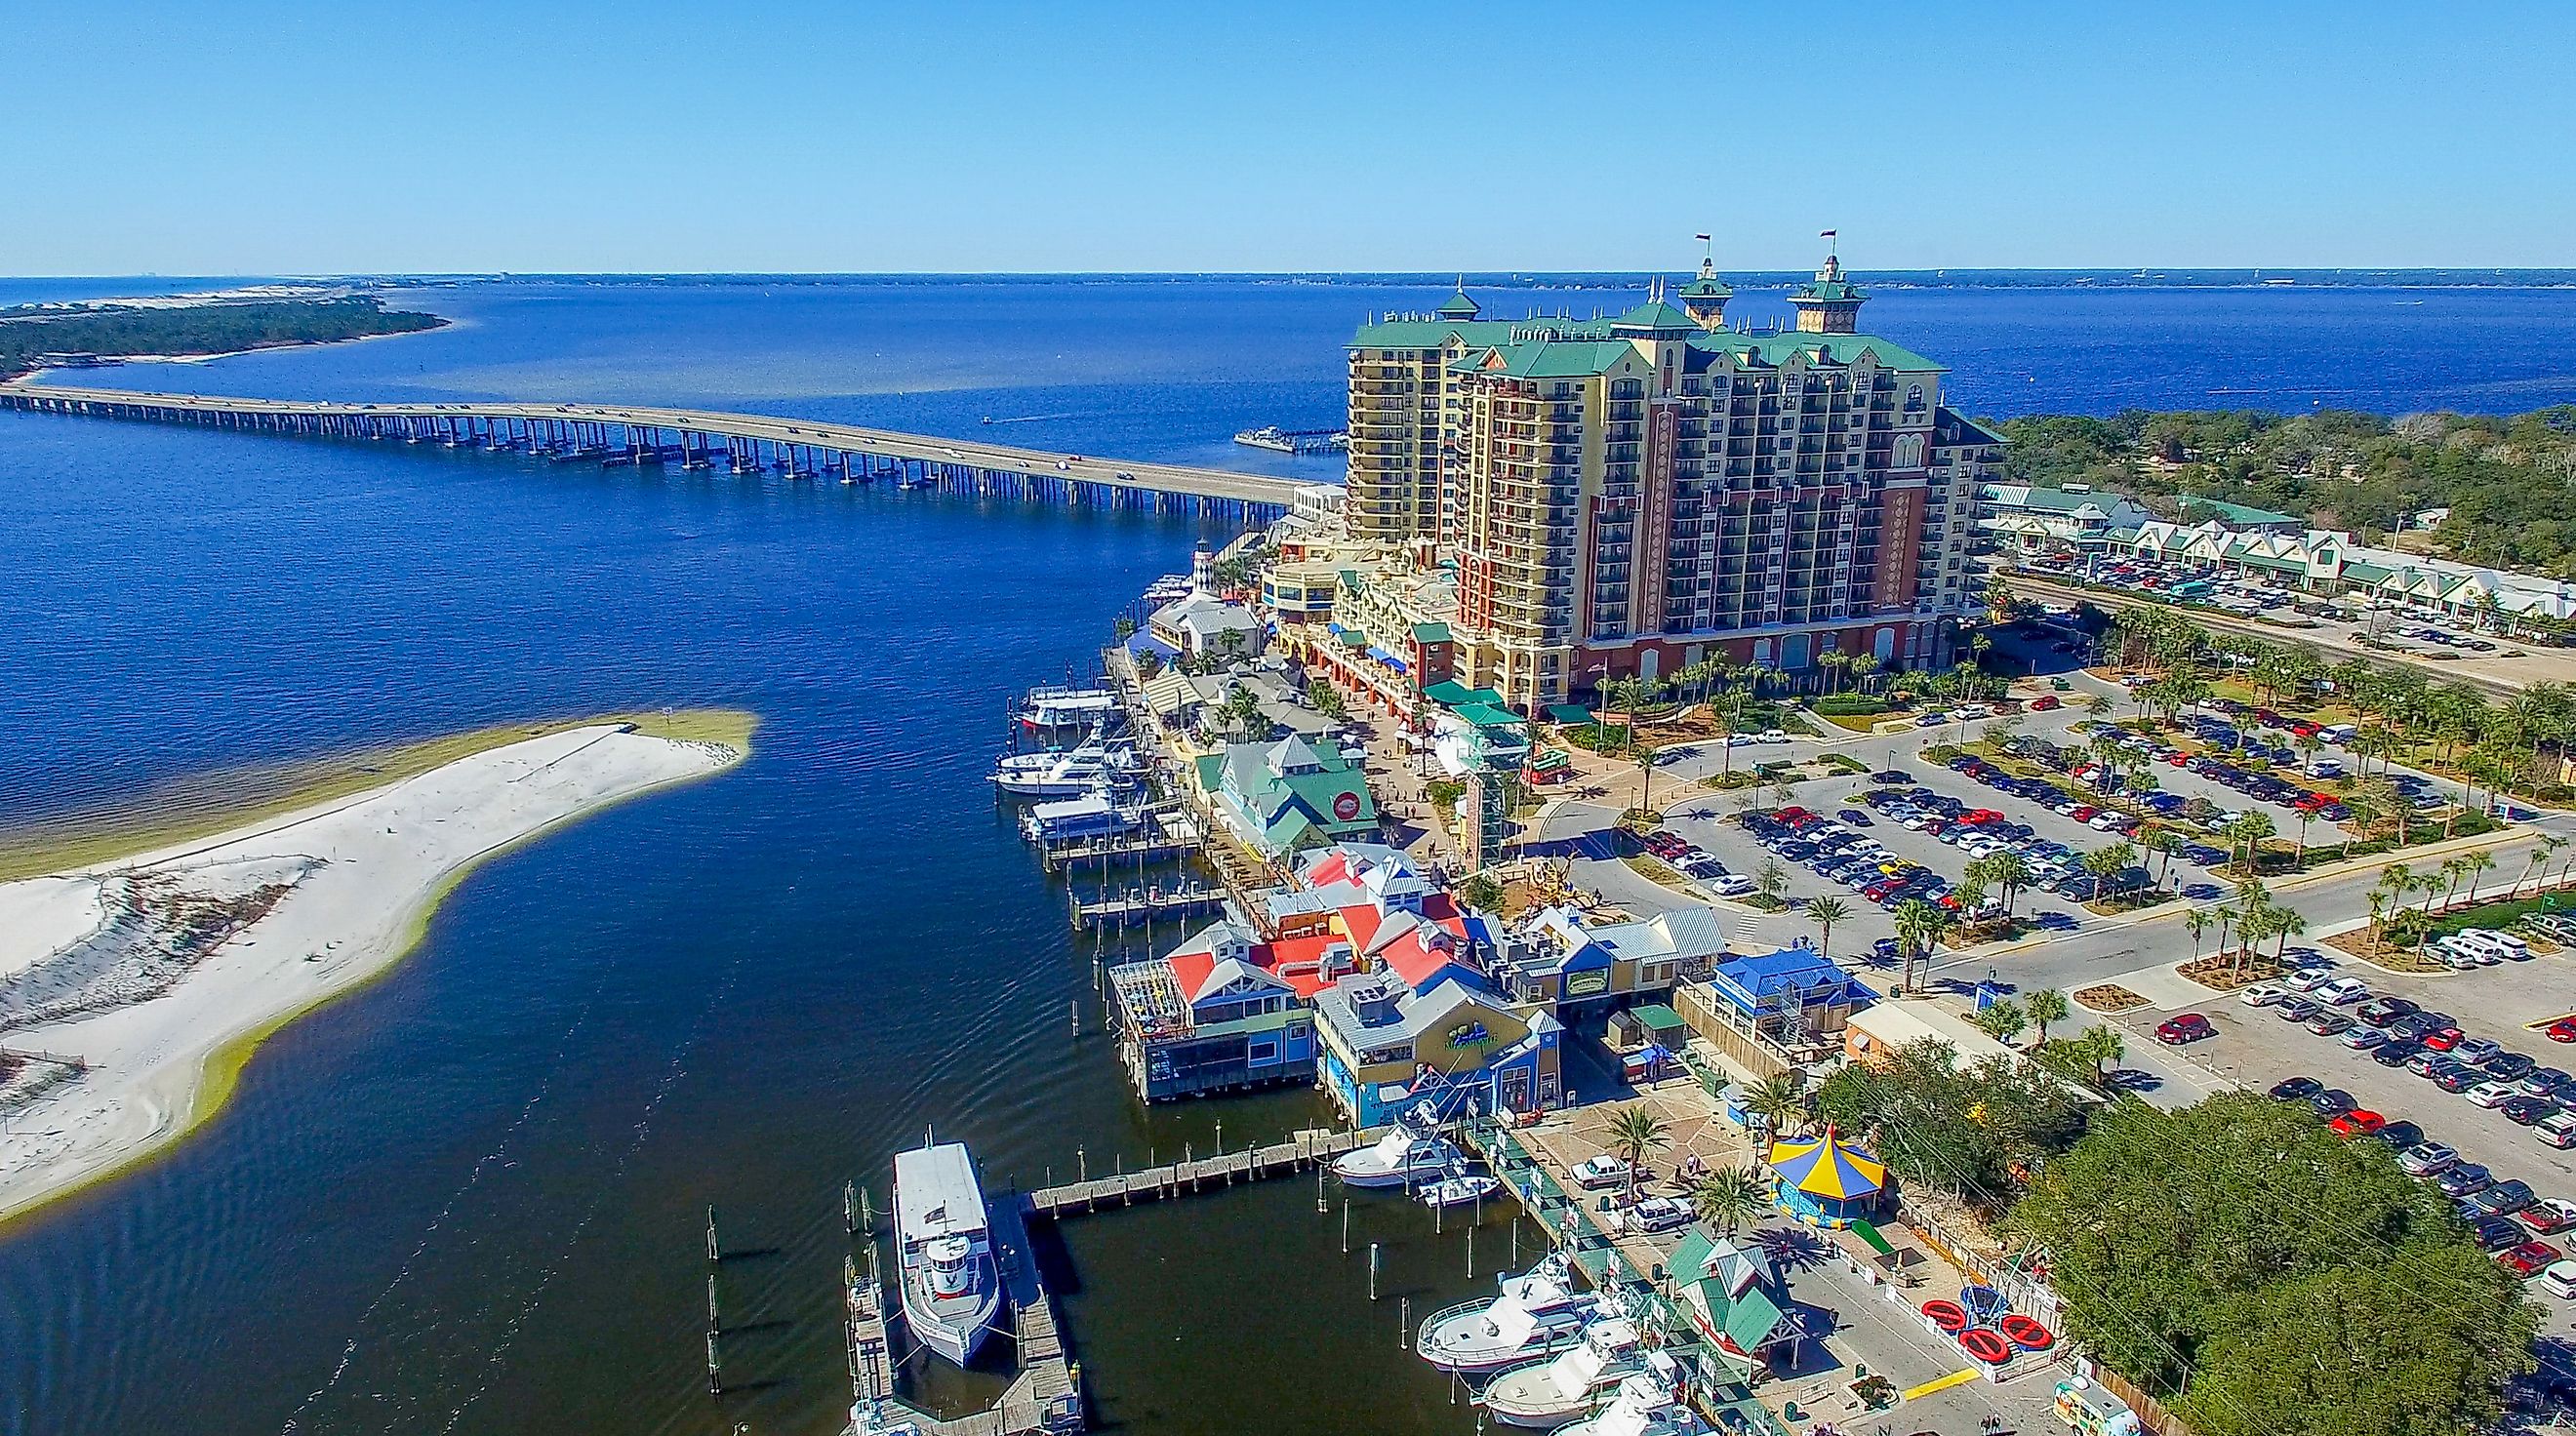 Aerial view of the coastline in Destin, Florida.